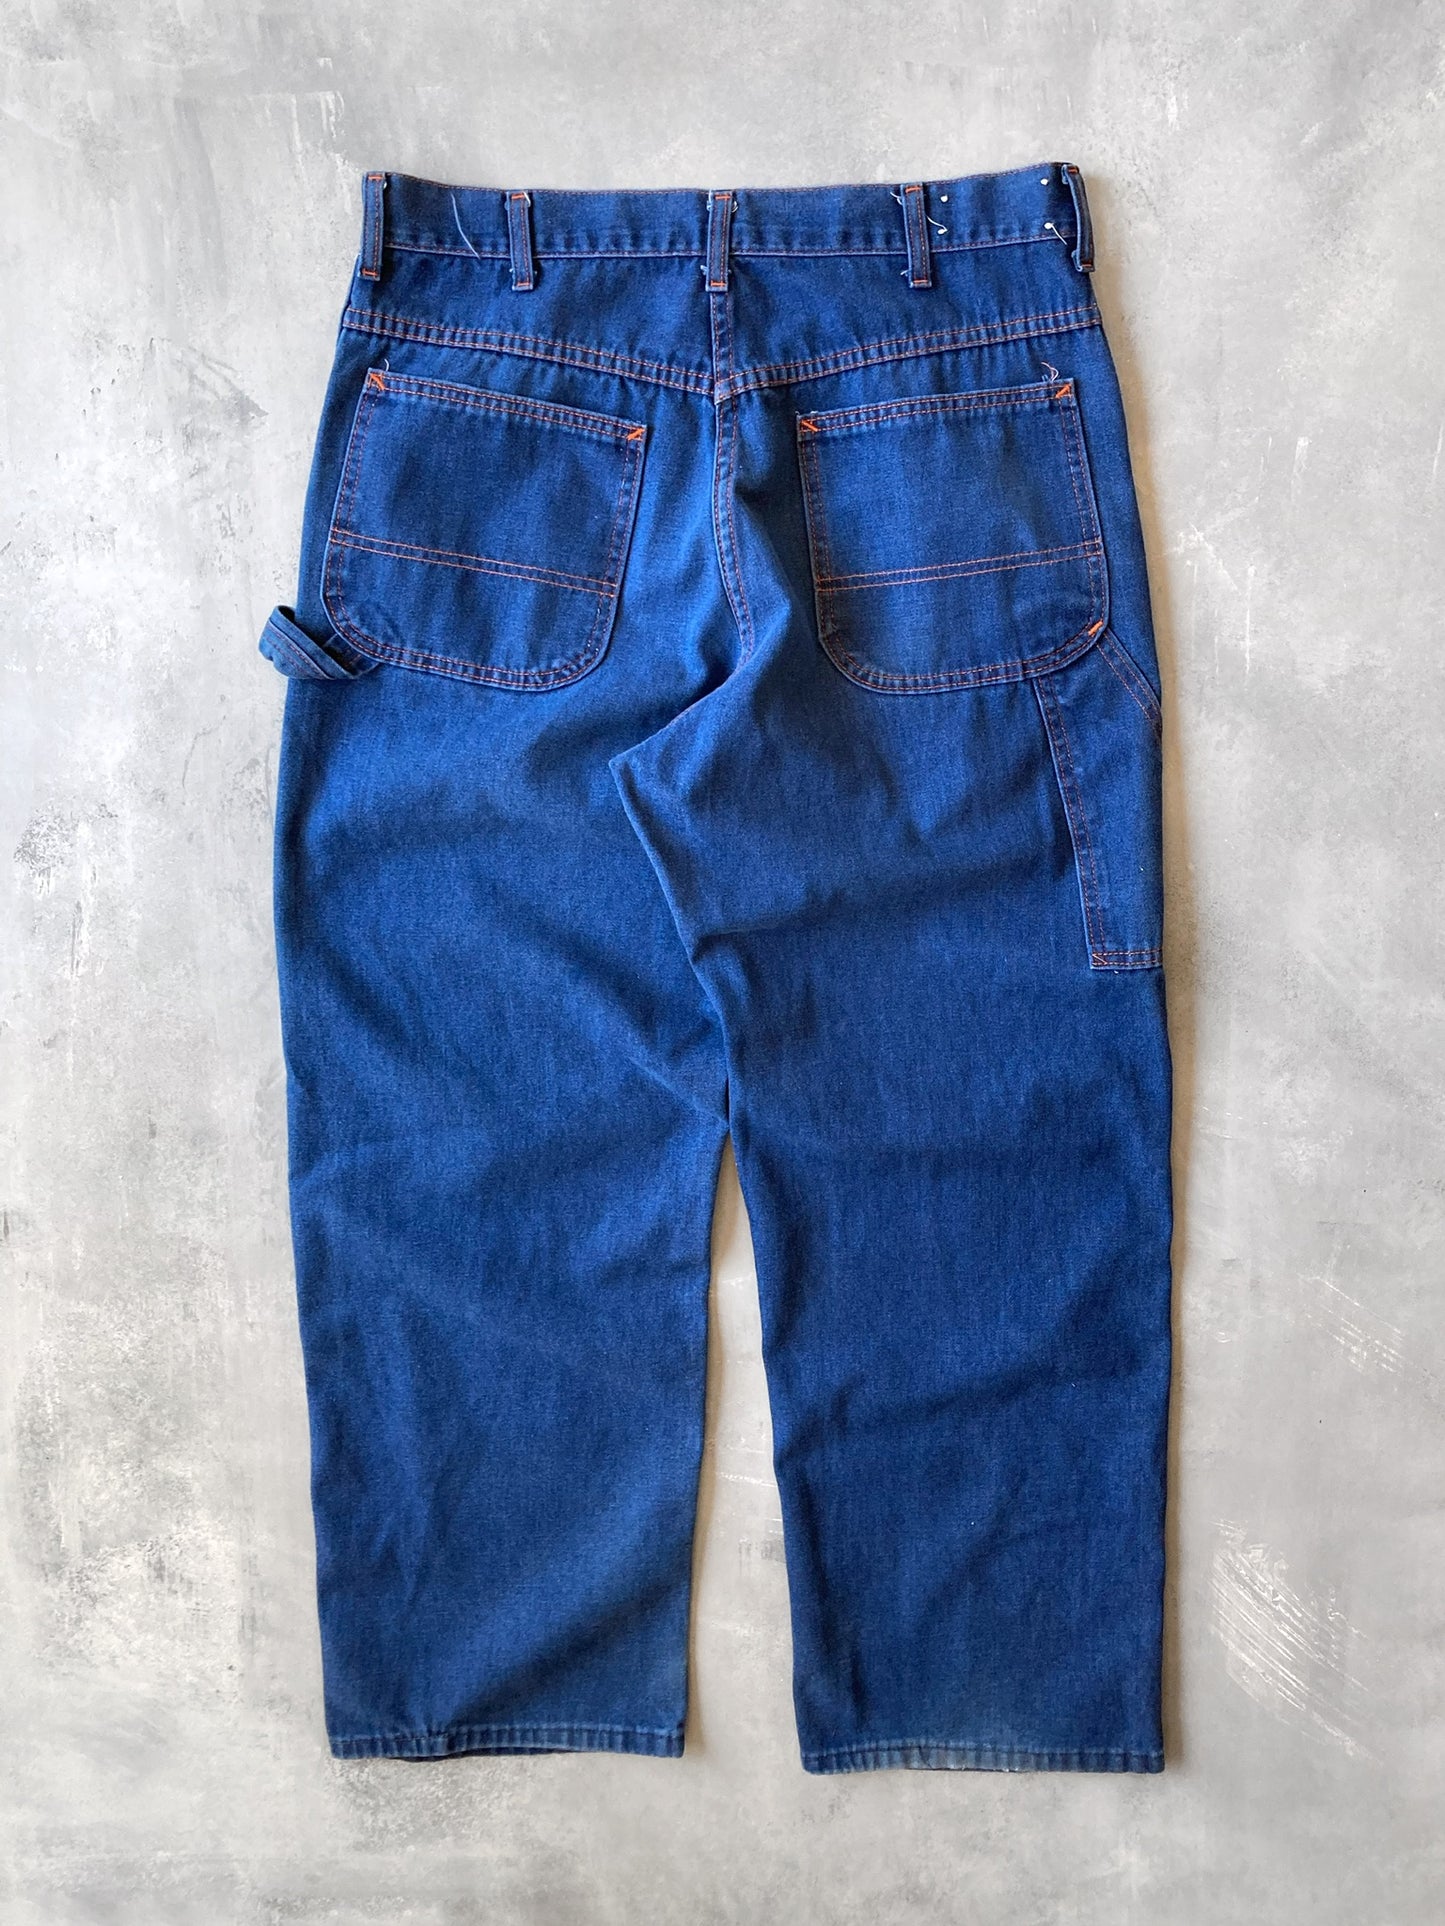 Contrast Stitched Carpenter Jeans 80's - 34x29 / 12